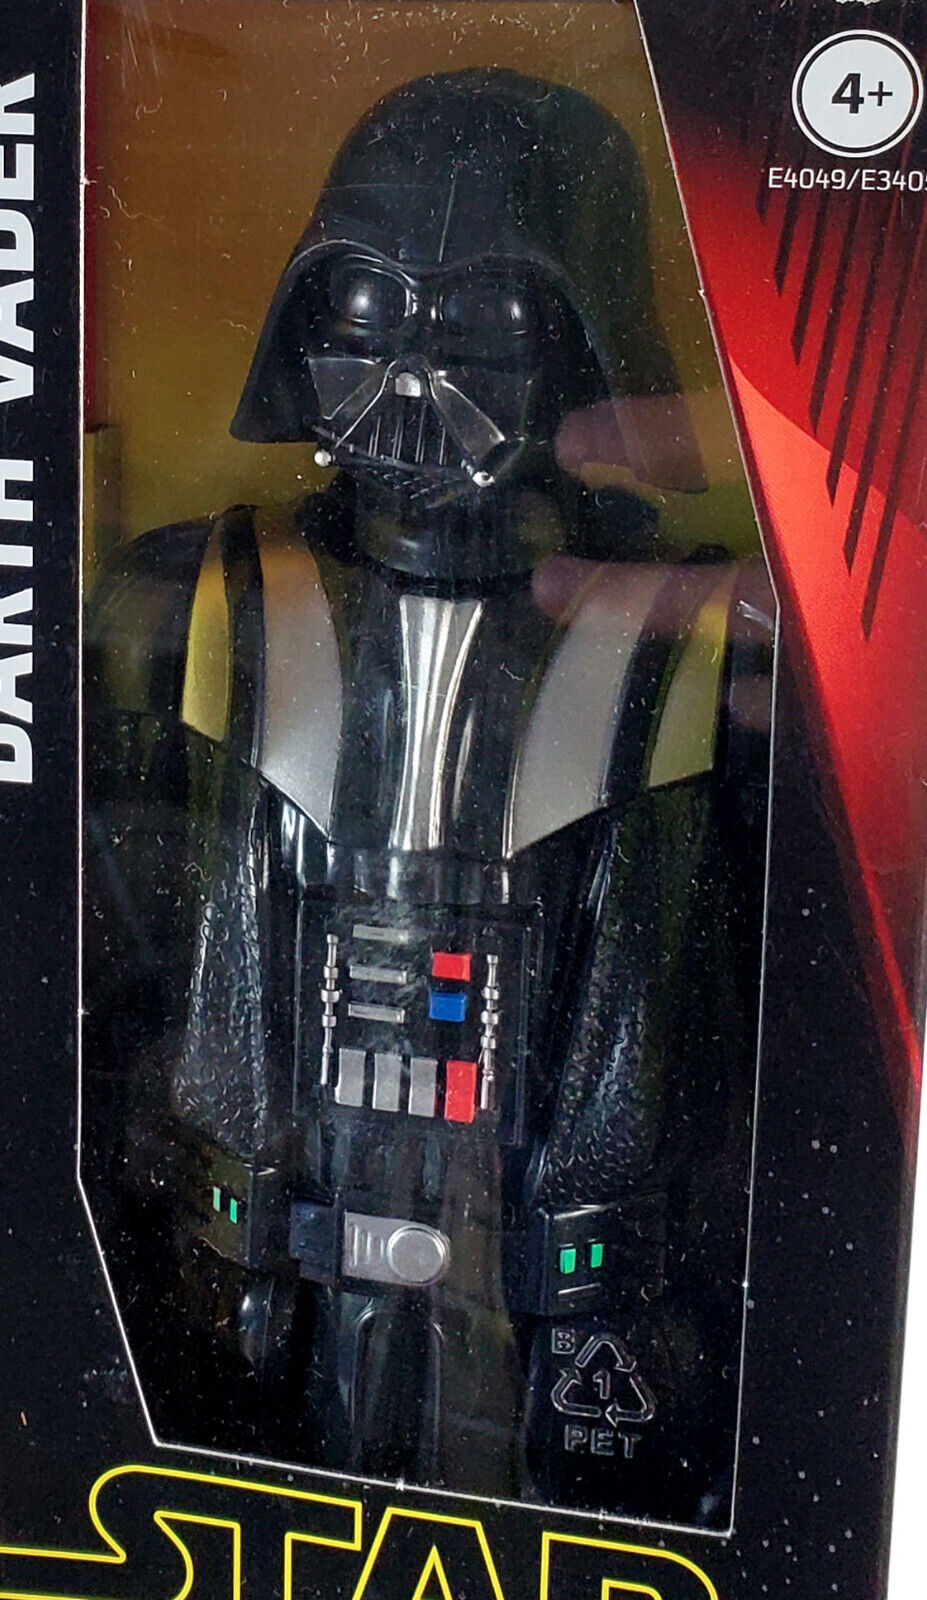 Star Wars Revenge Of The Sith - Darth Vader Hasbro 12-inch Action Figure Toy Hasbro E4049 - фотография #2